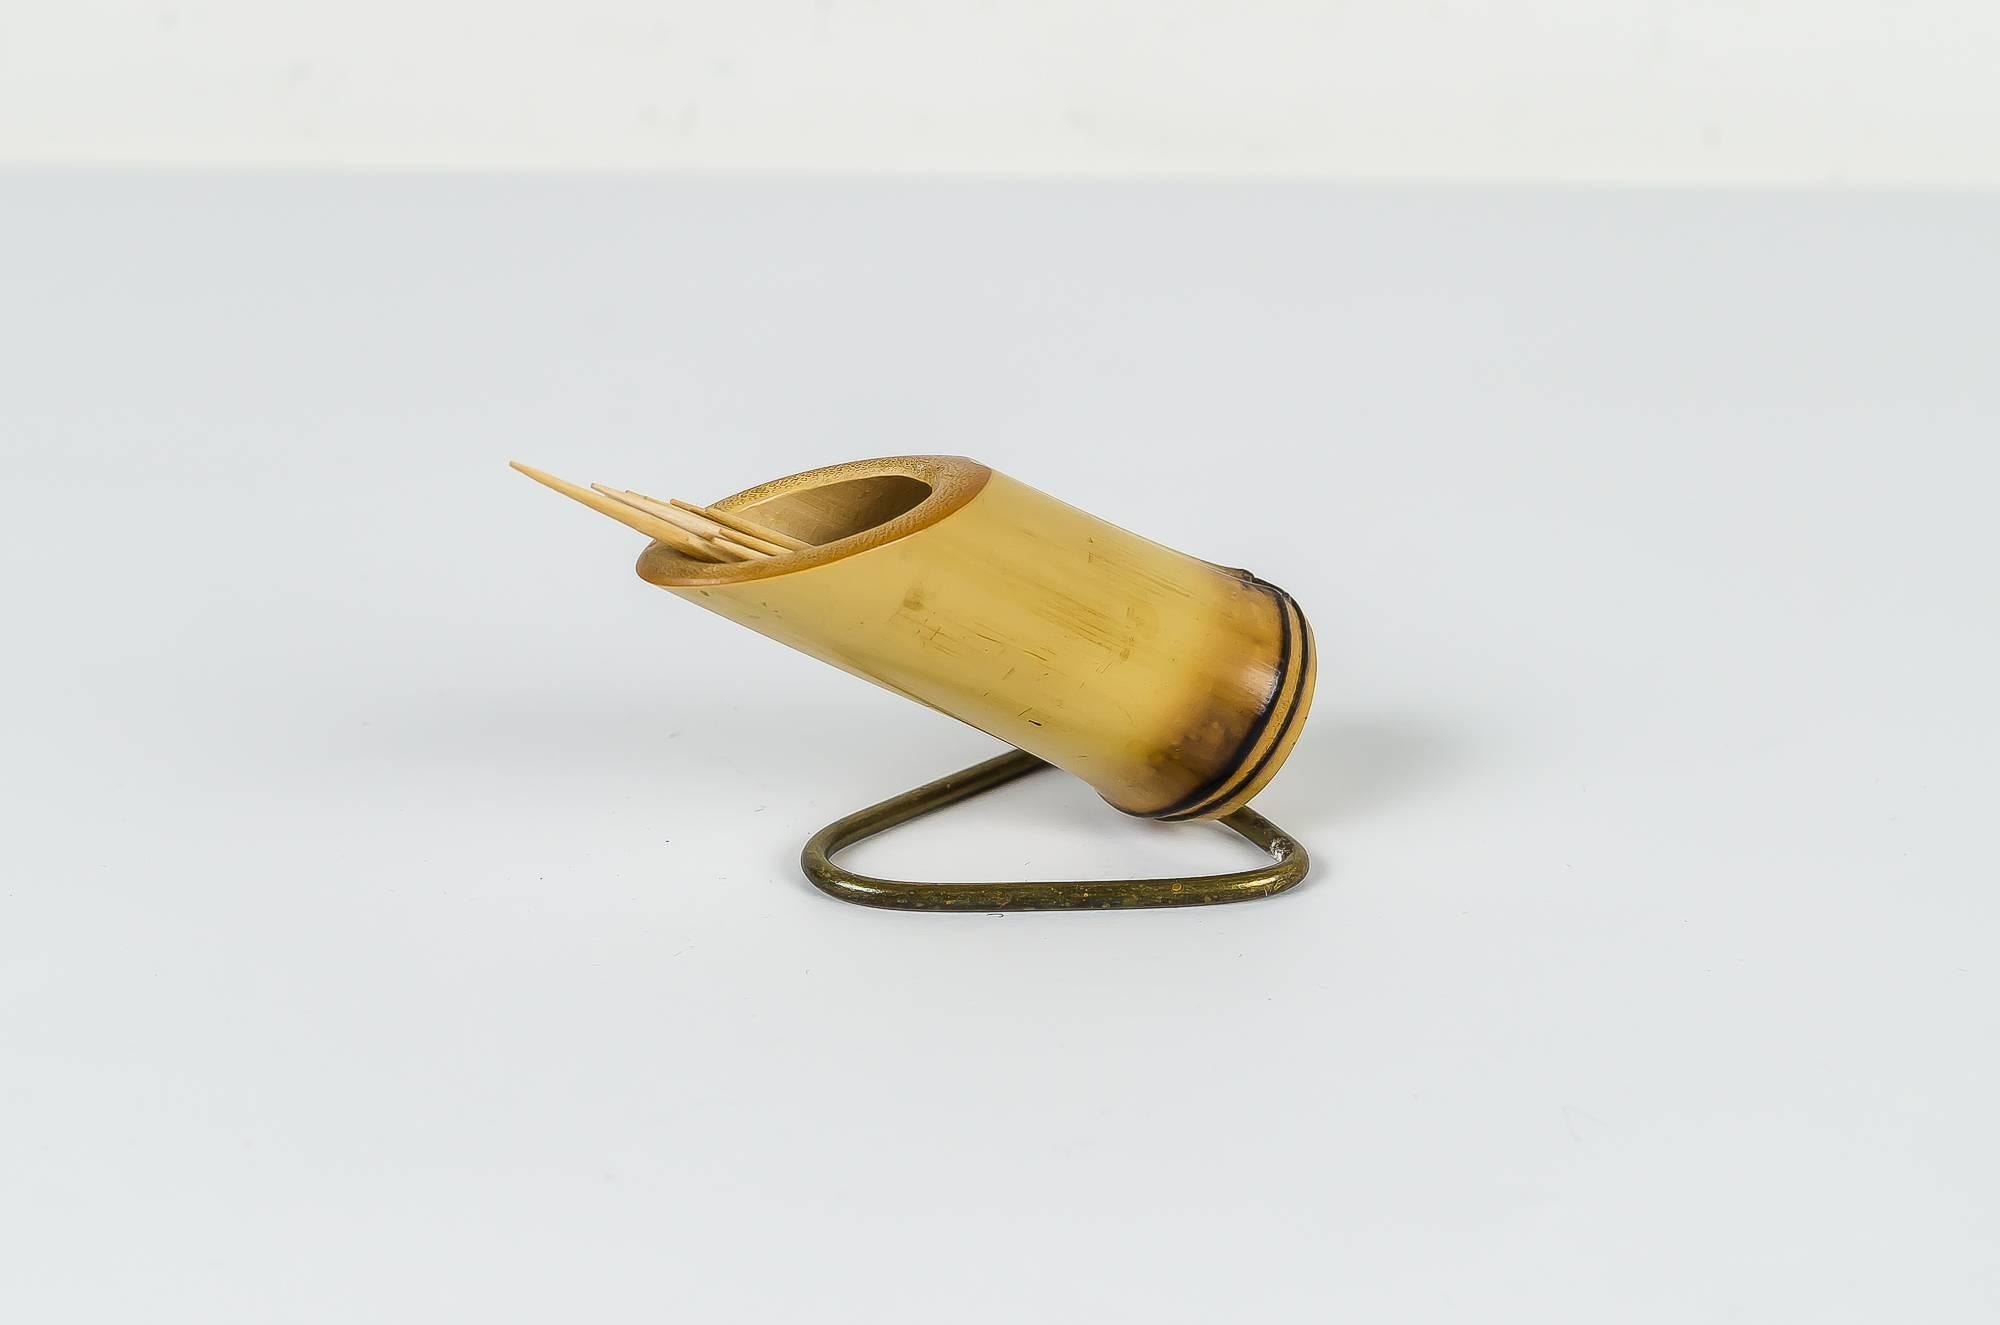 Bamboo toothpick holder, circa 1950s
Original condition.